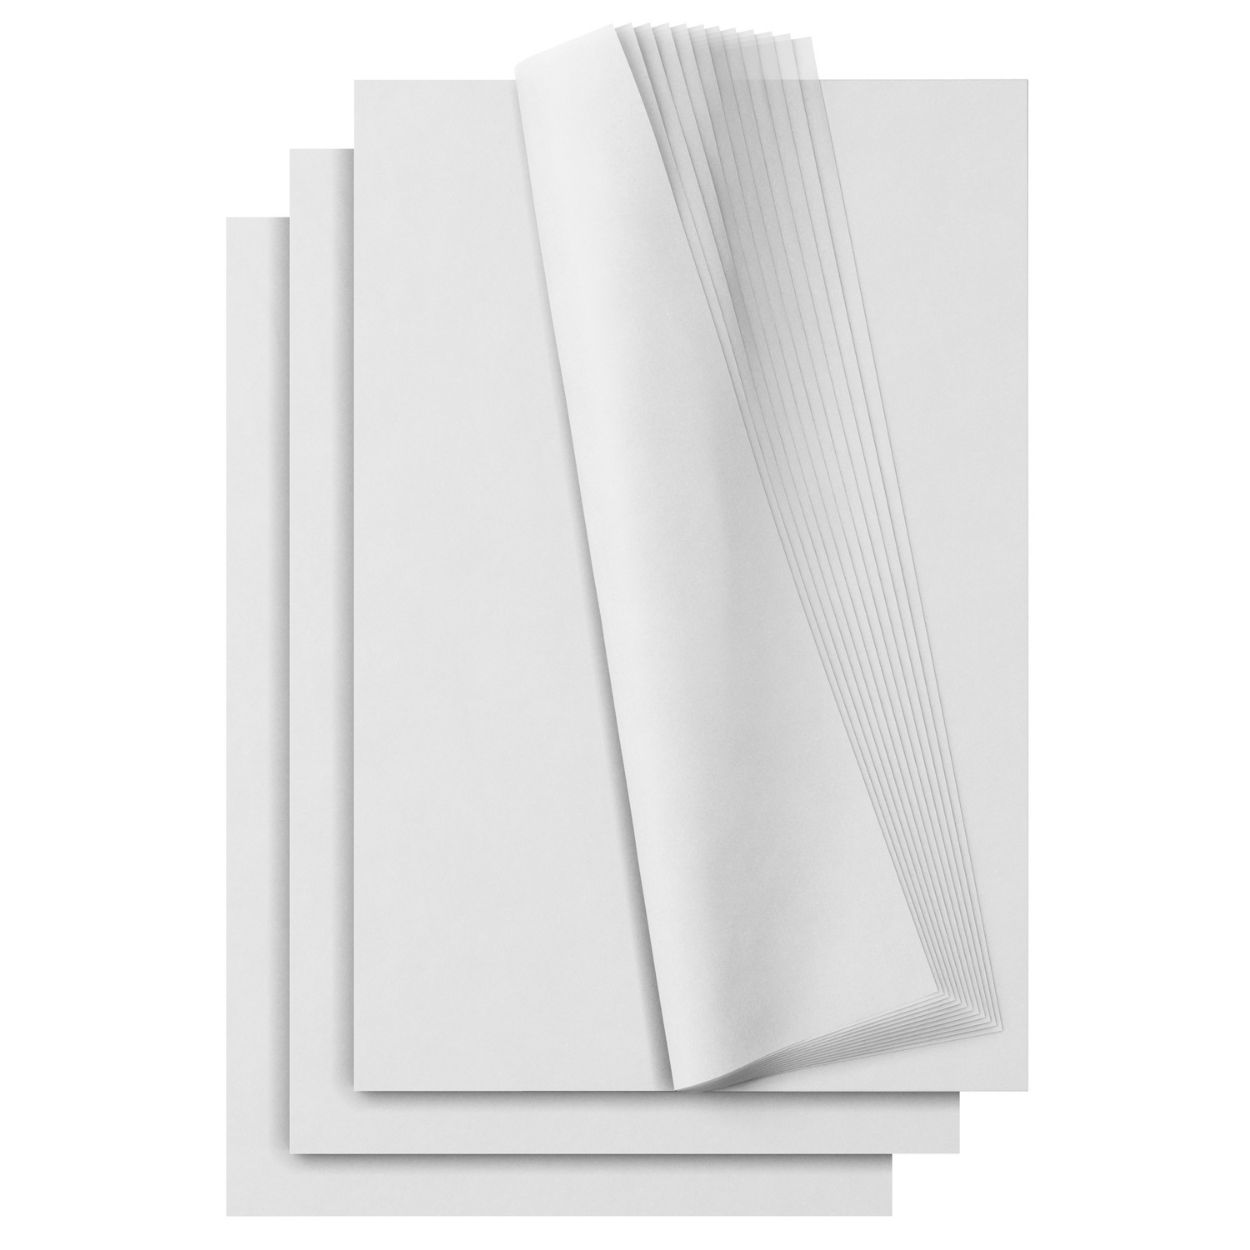 Tissue Paper Ream 750mm x 500mm, 480 Sheets - White